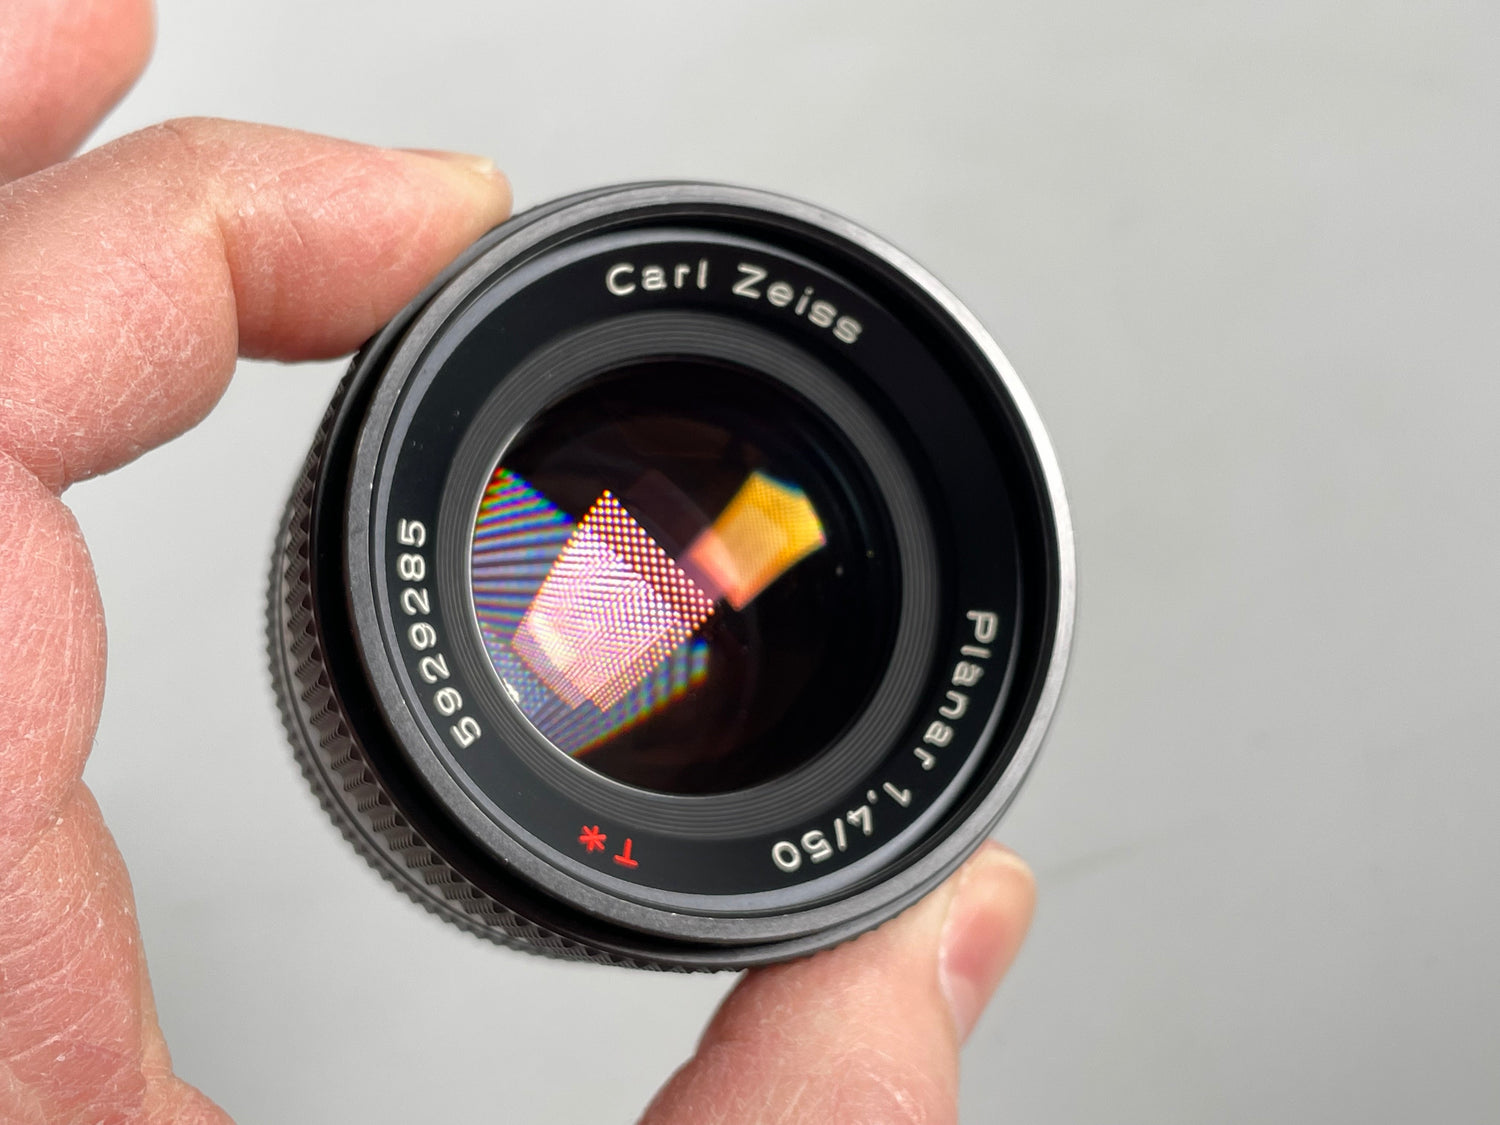 Contax Carl Zeiss Planar T* 50mm F/1.4 Lens CY Mount AEJ